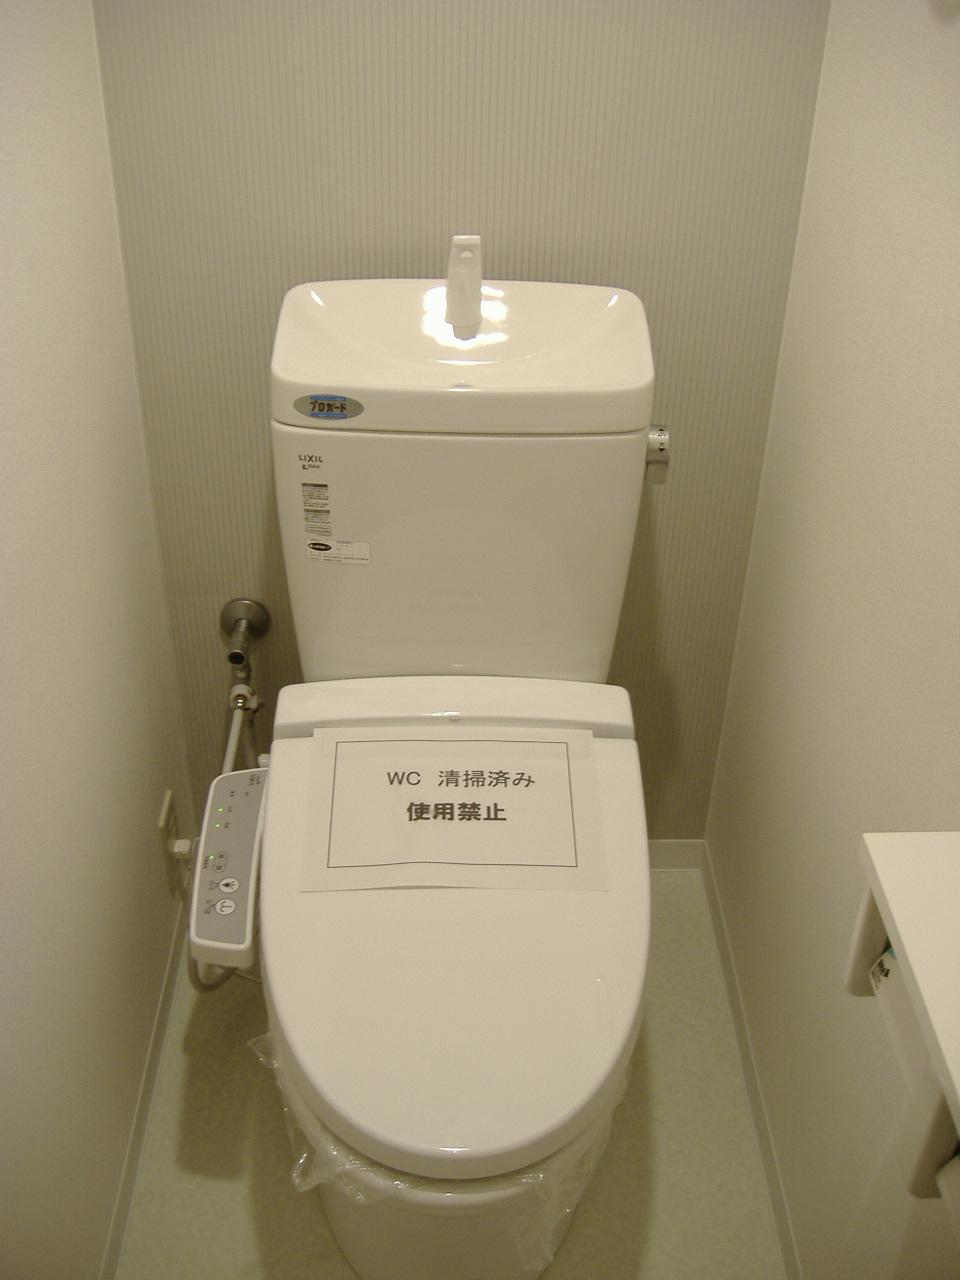 Toilet. toilet. tank ・ Shower toilet already replaced. cross ・ CF Hakawa is settled.